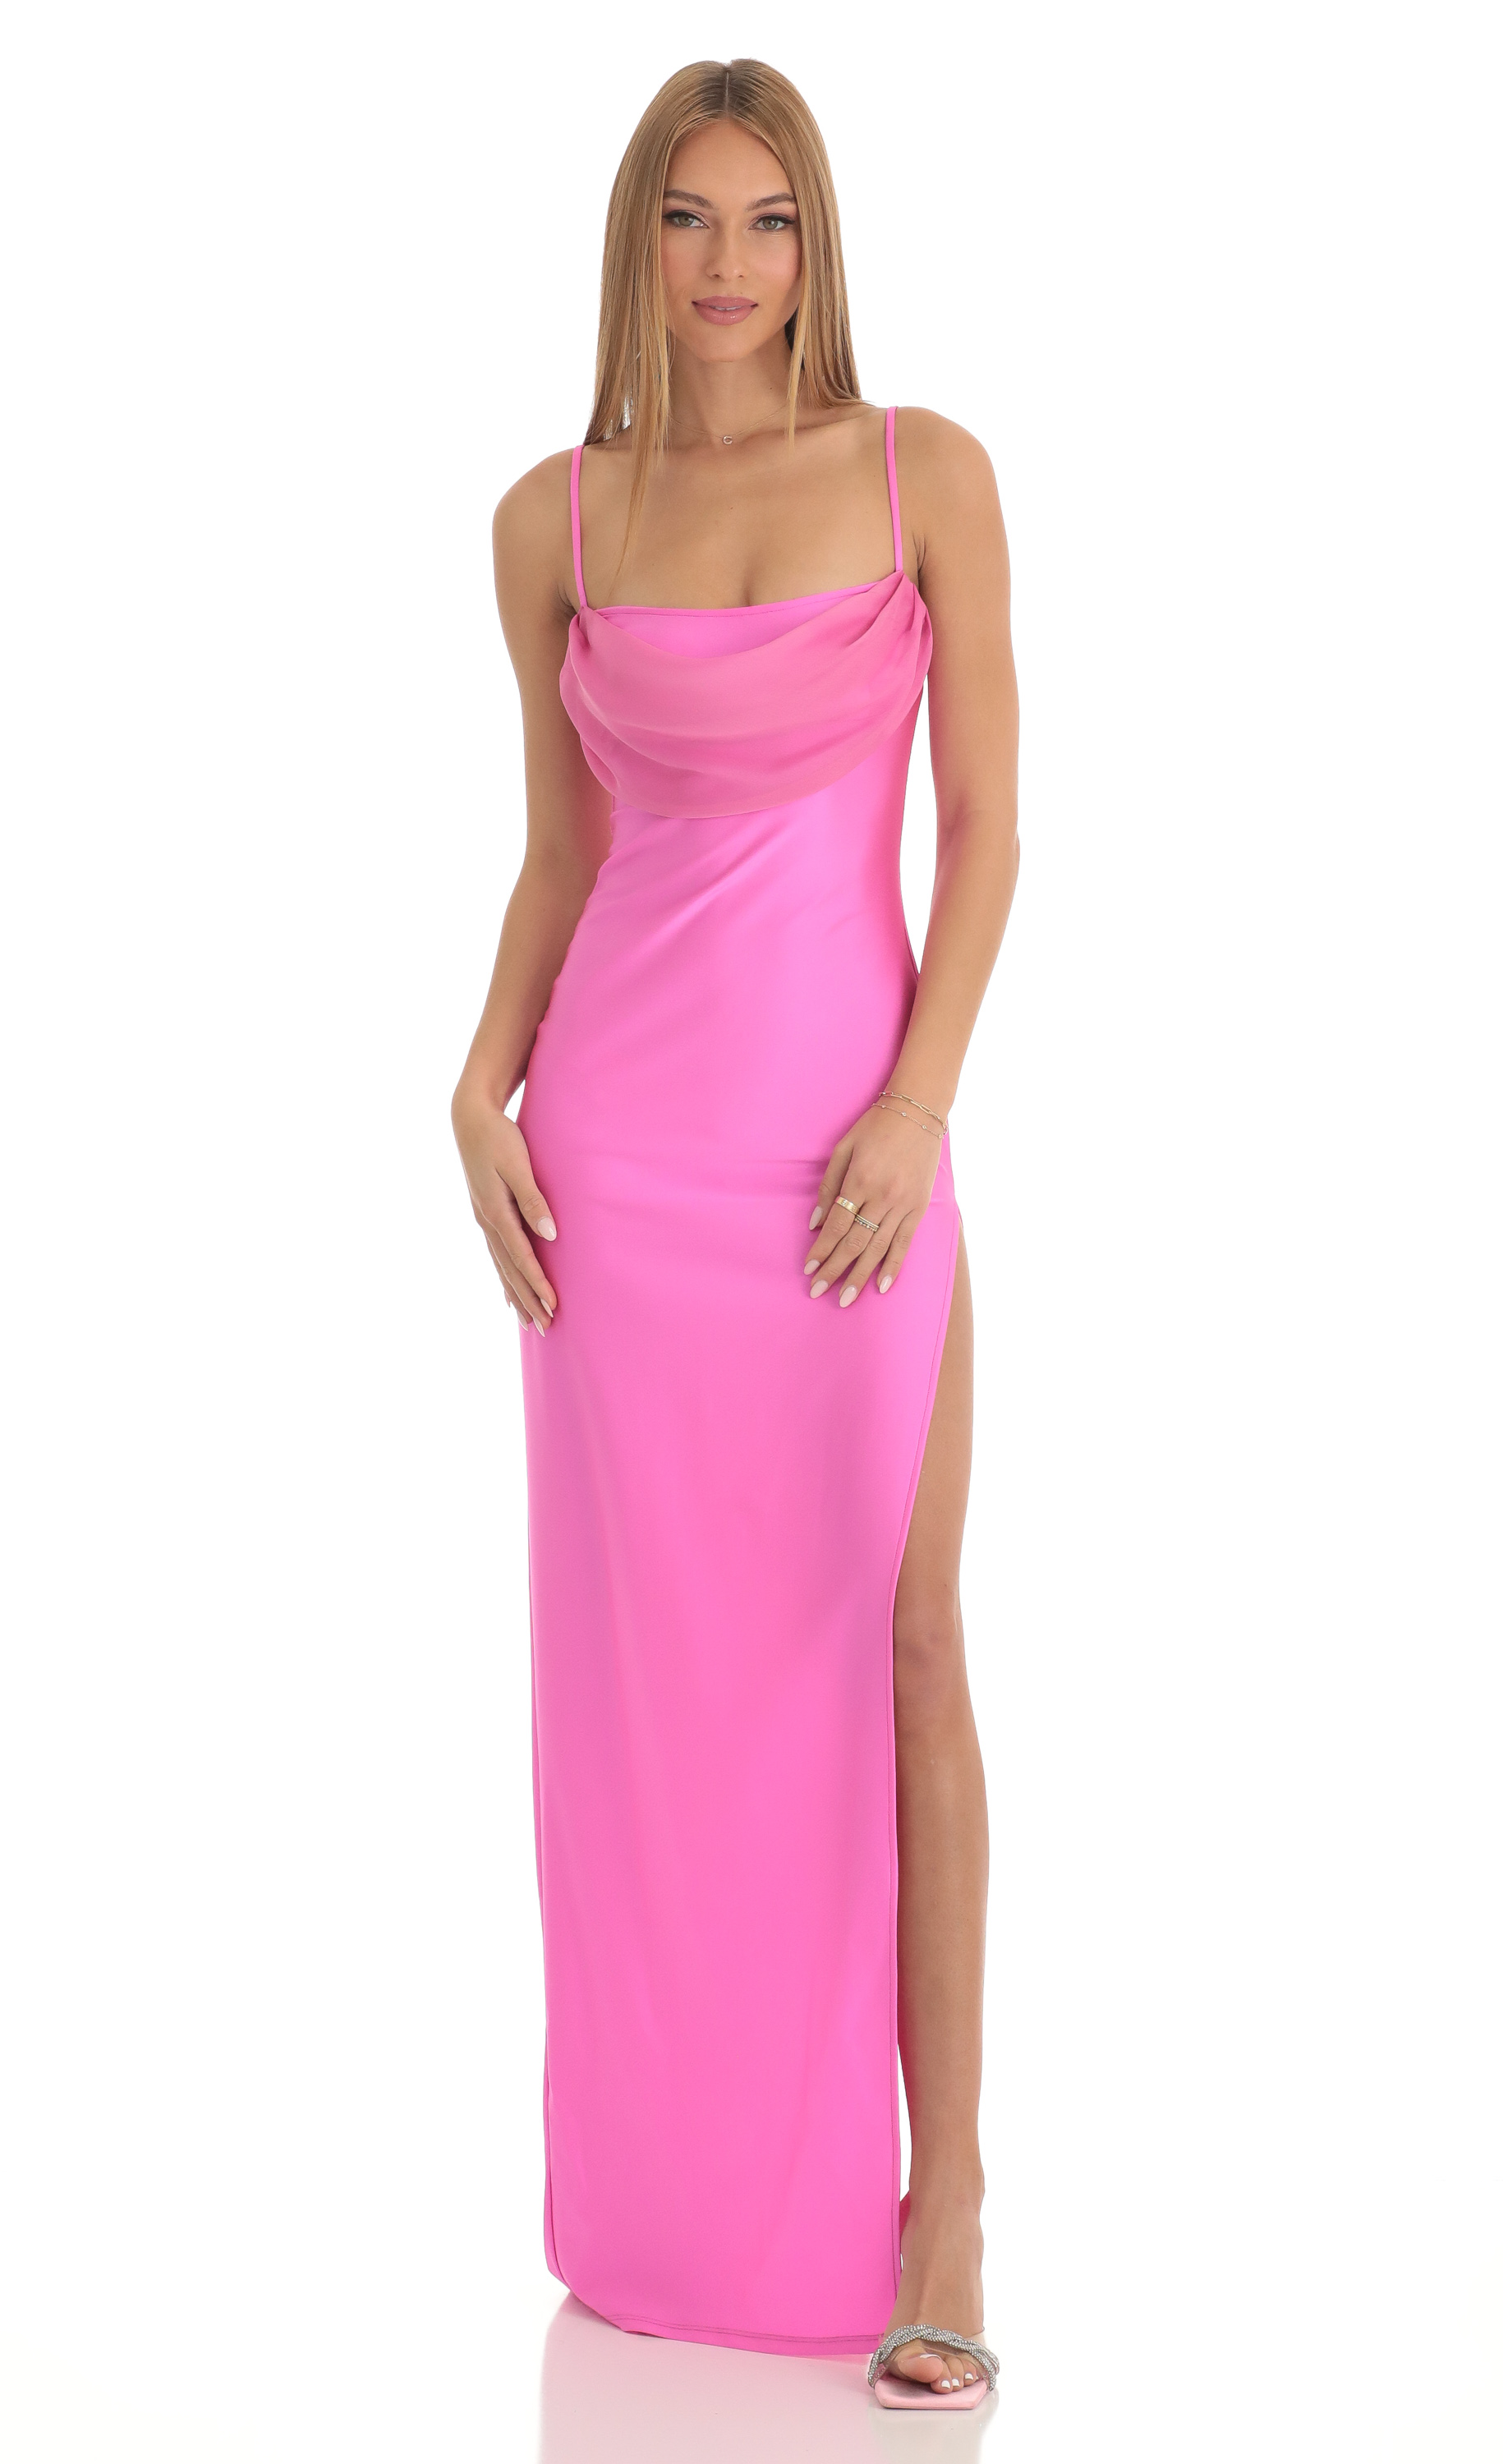 Yennefer High Slit Cowl Neck Maxi Dress in Hot Pink